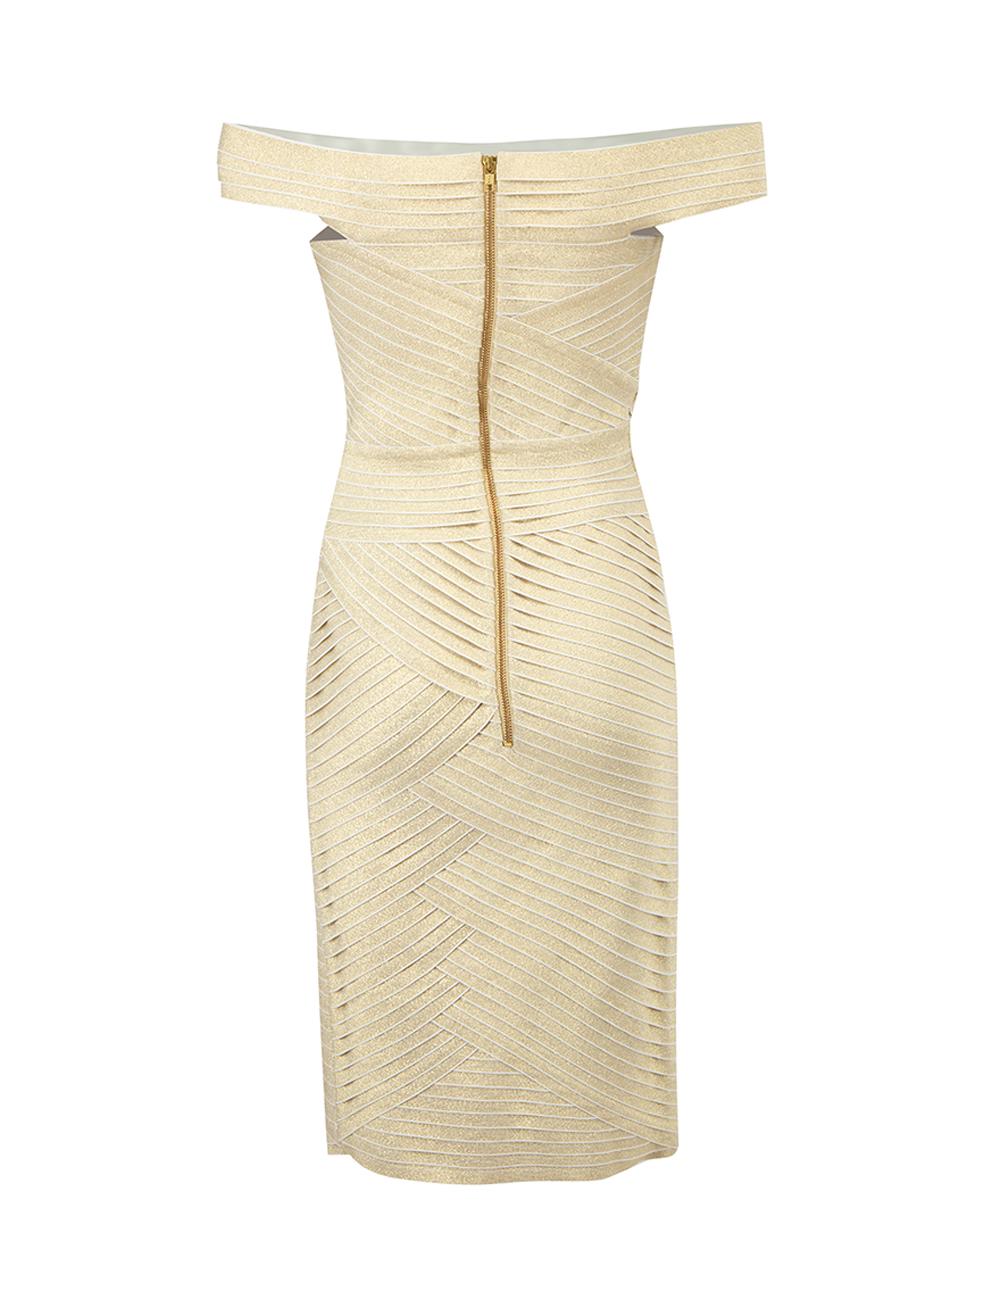 Balmain Women's Pierre Balmain Gold Bandage Bodycon Mini Dress In Good Condition For Sale In London, GB